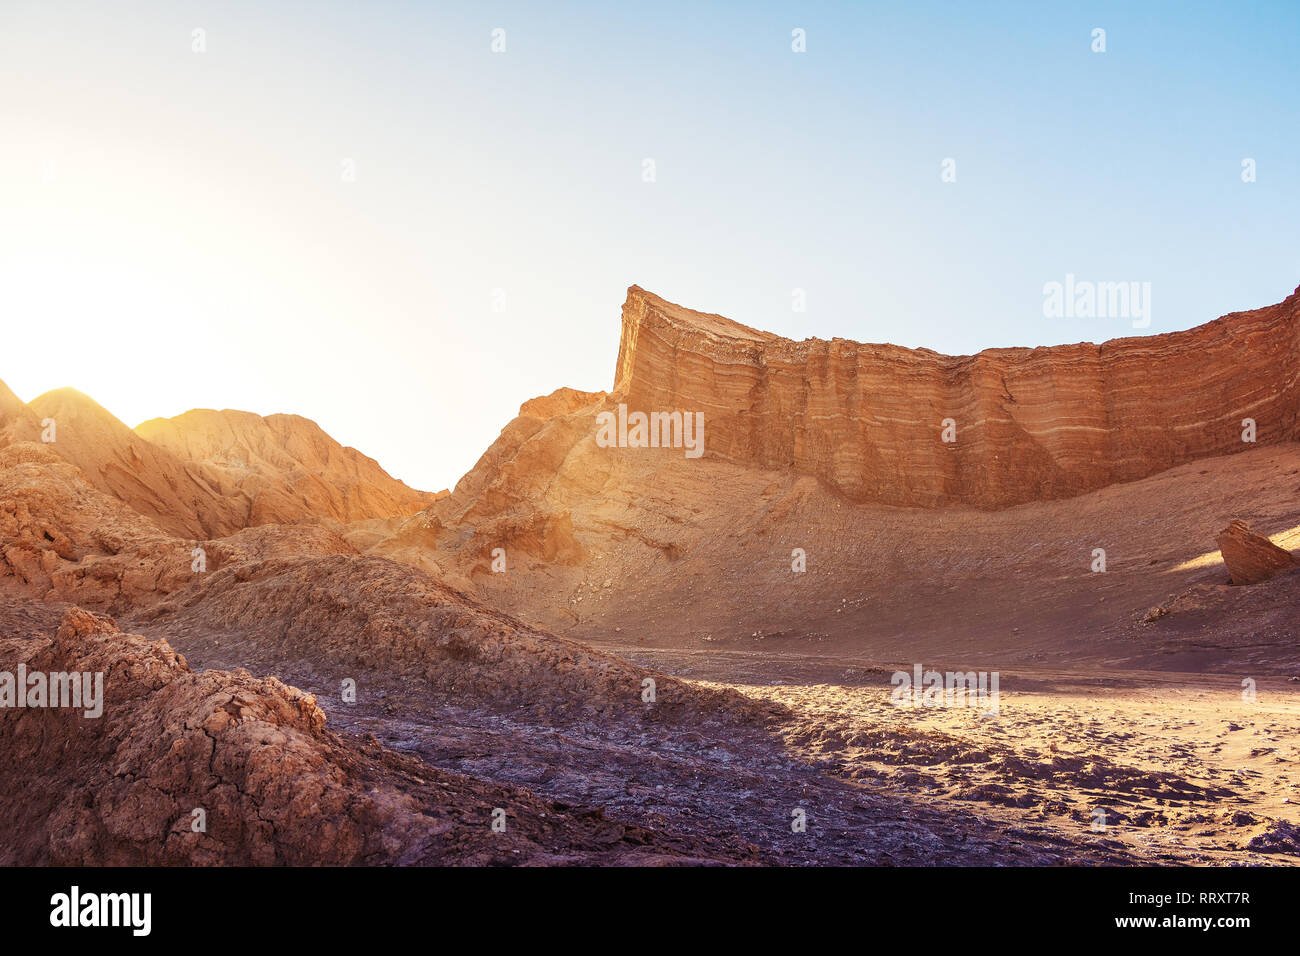 Amphitheater-Bildung auf das Mondtal - Atacama-Wüste, Chile Stockfoto